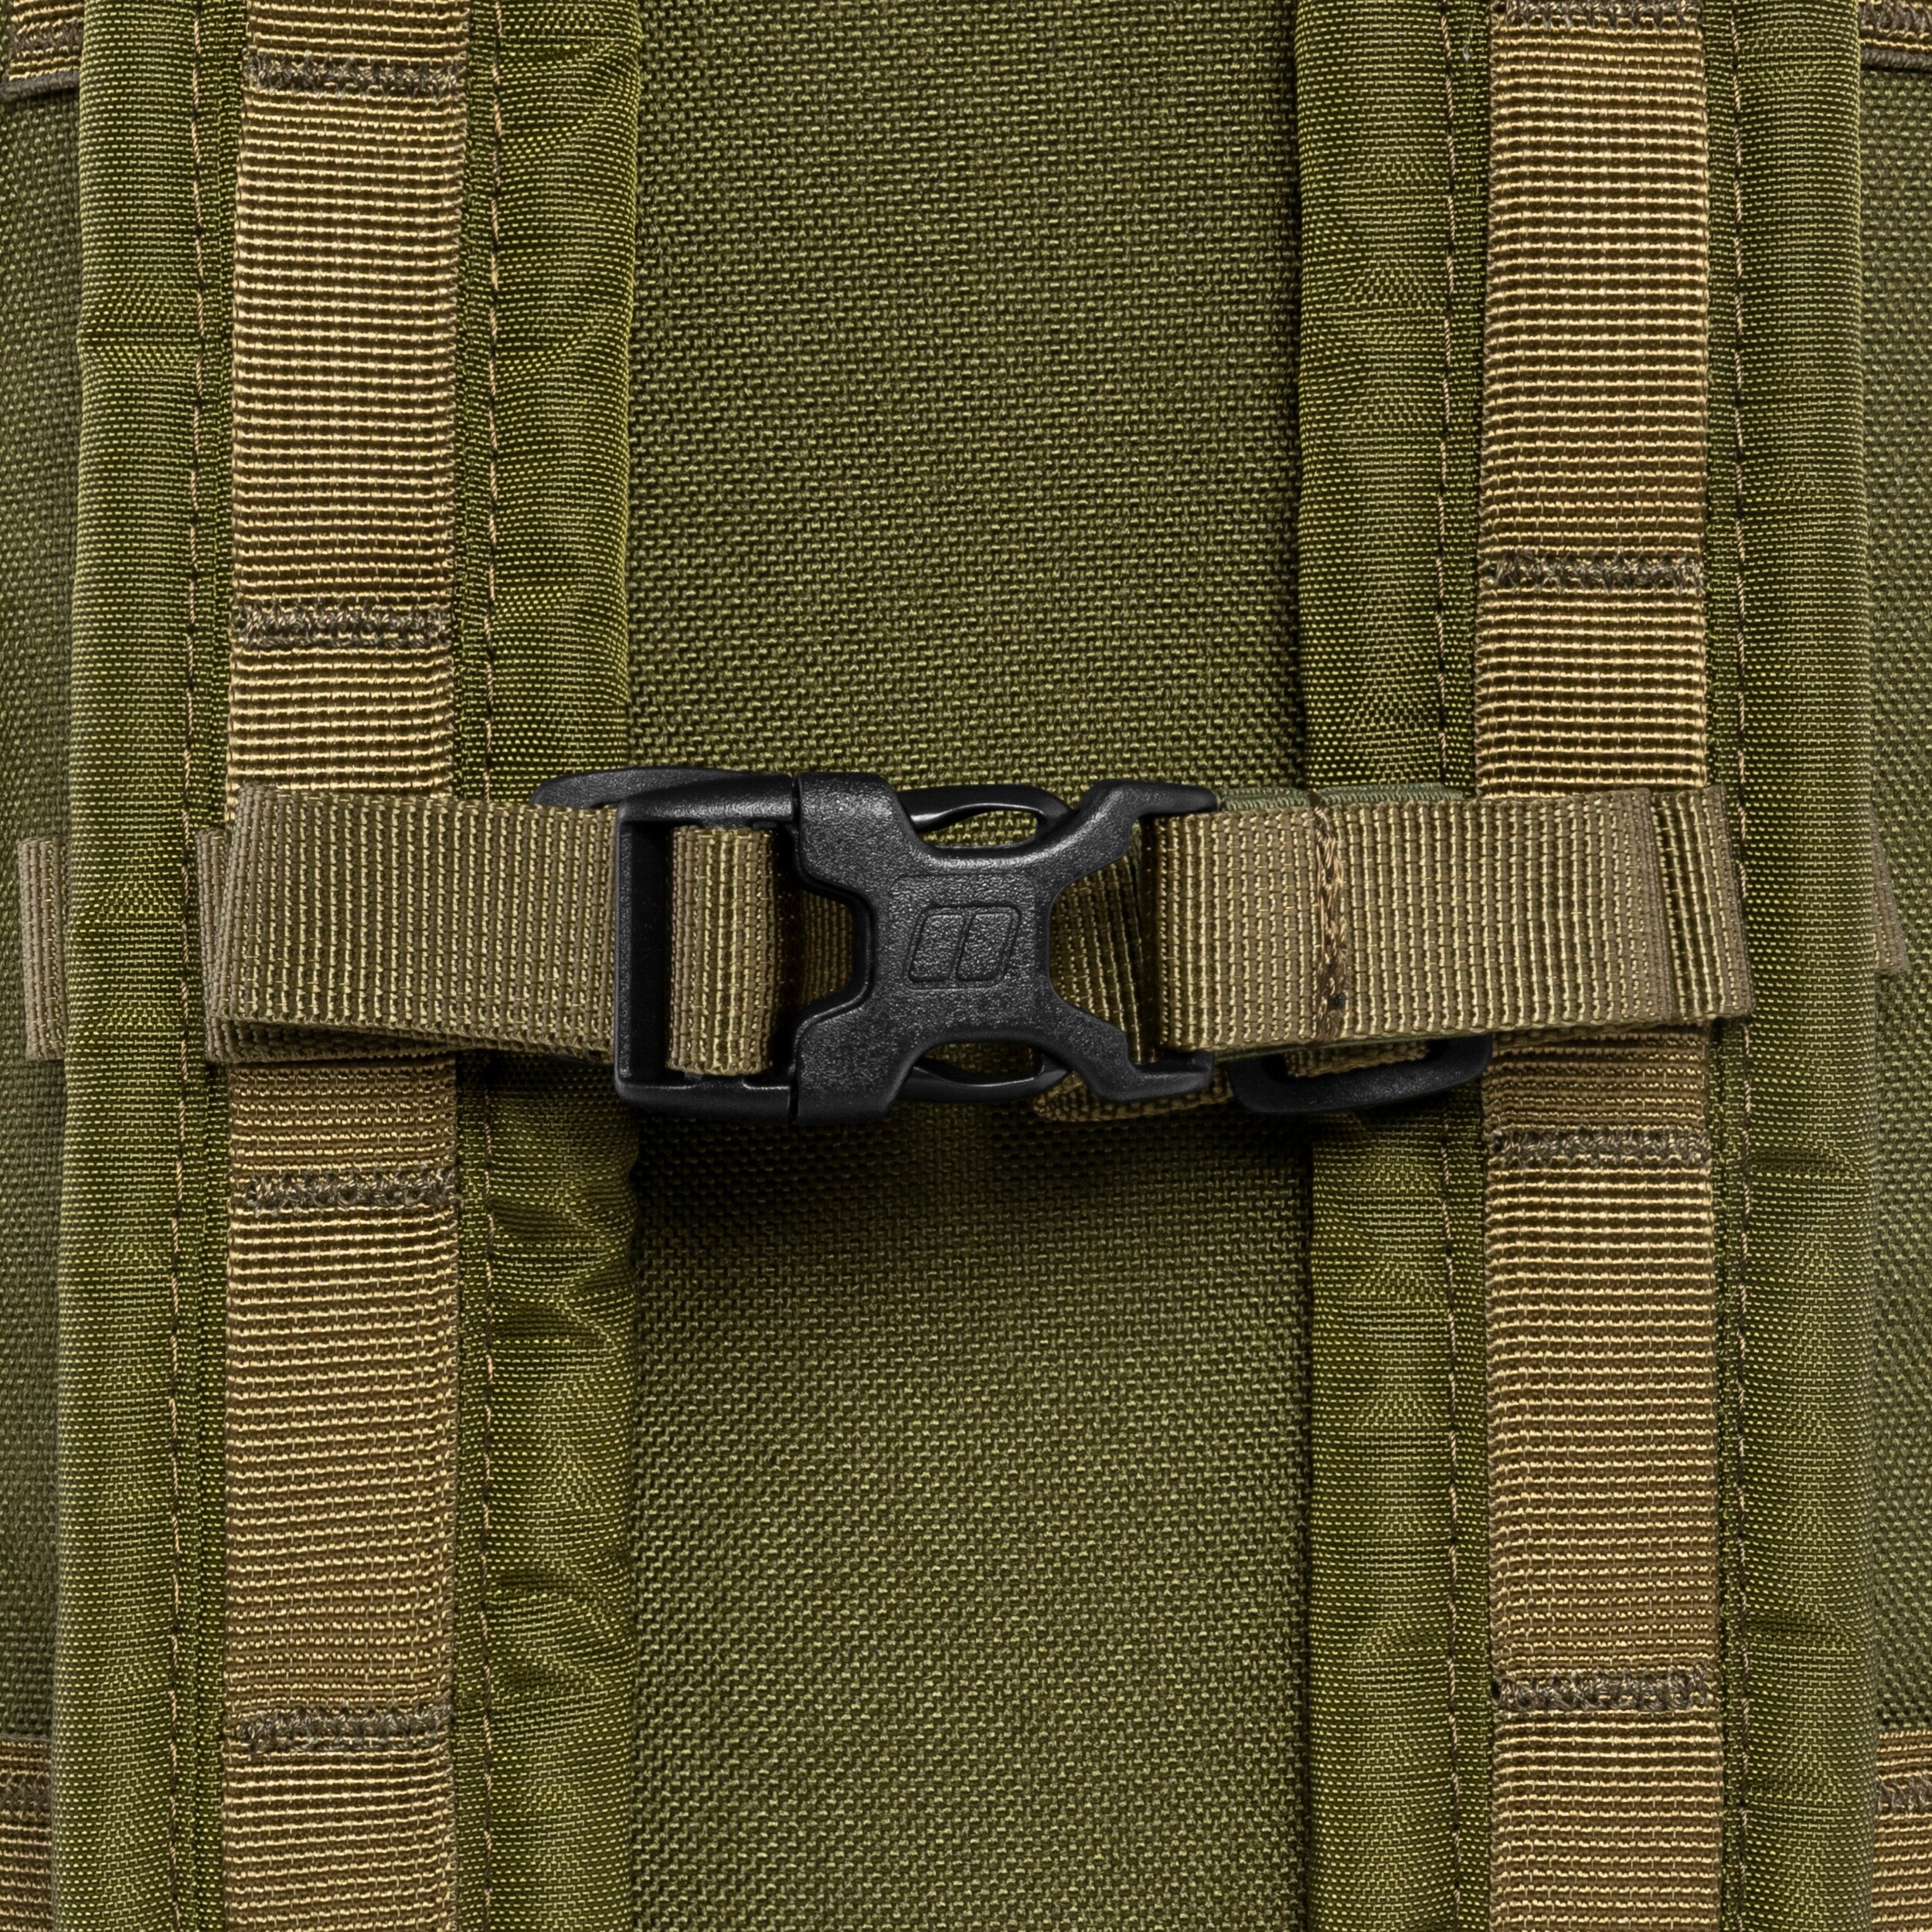 Kieszeń Berghaus Tactical MMPS Large Pockets II Cedar - 2 szt.